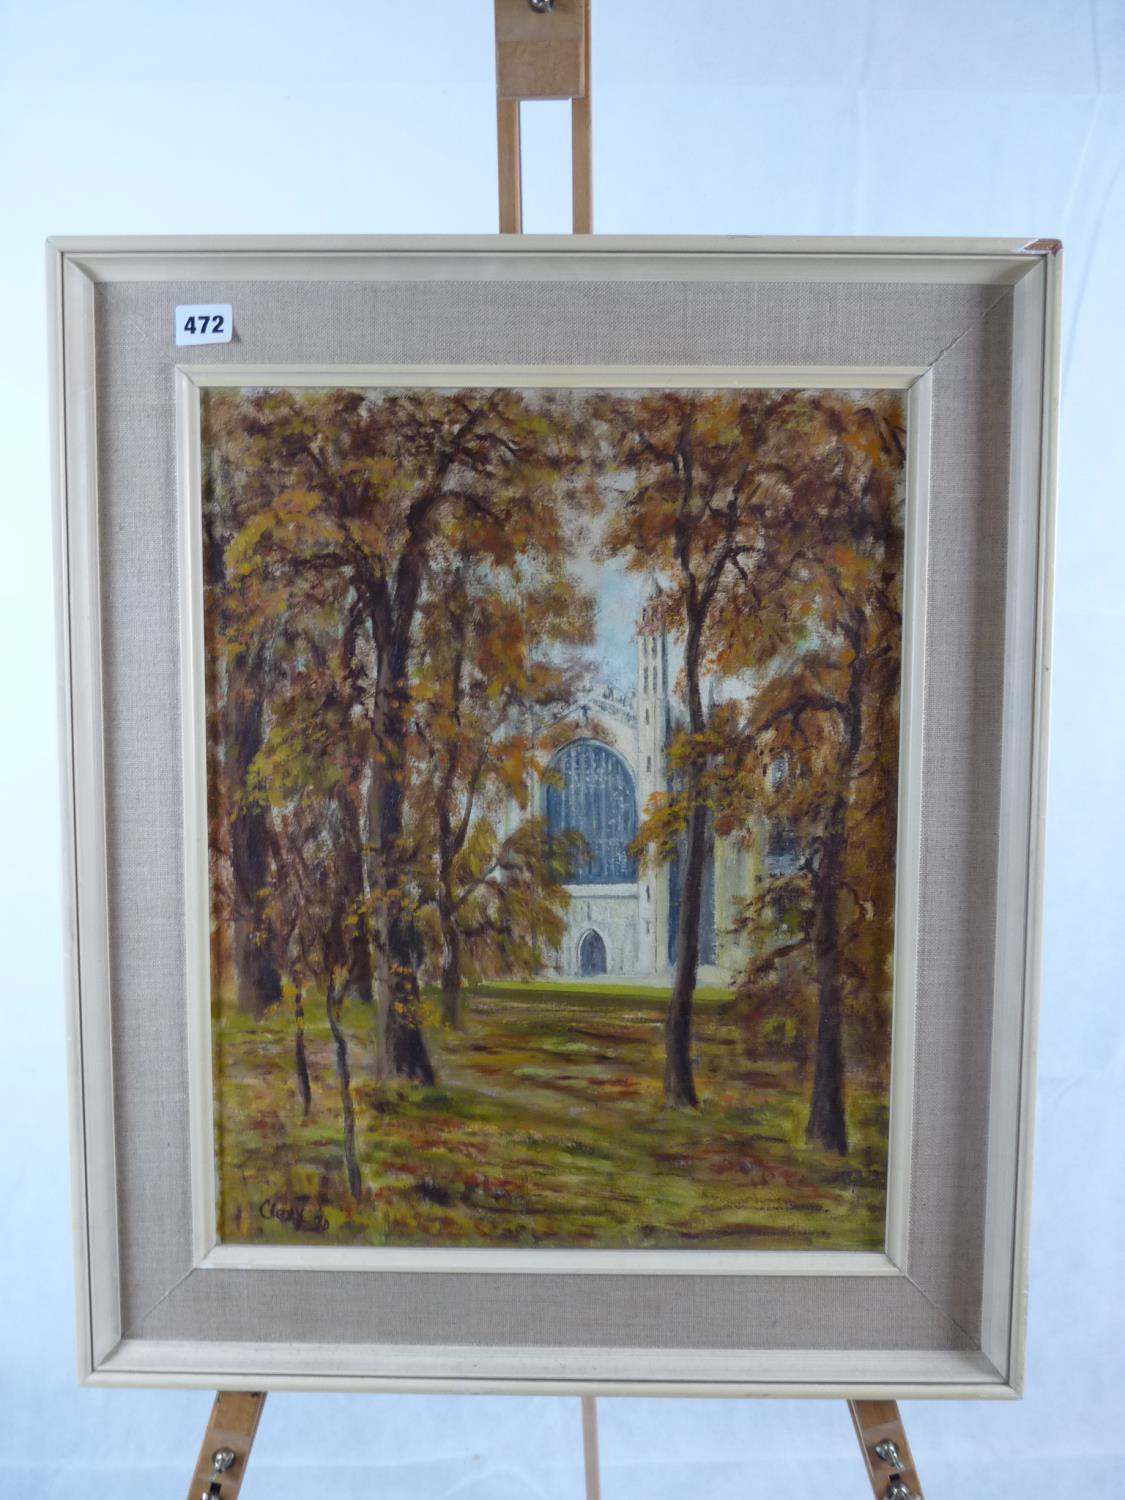 Framed Acrylic on Board entitled 'Autumn' by Clary Armstrong. 49 x 39cm